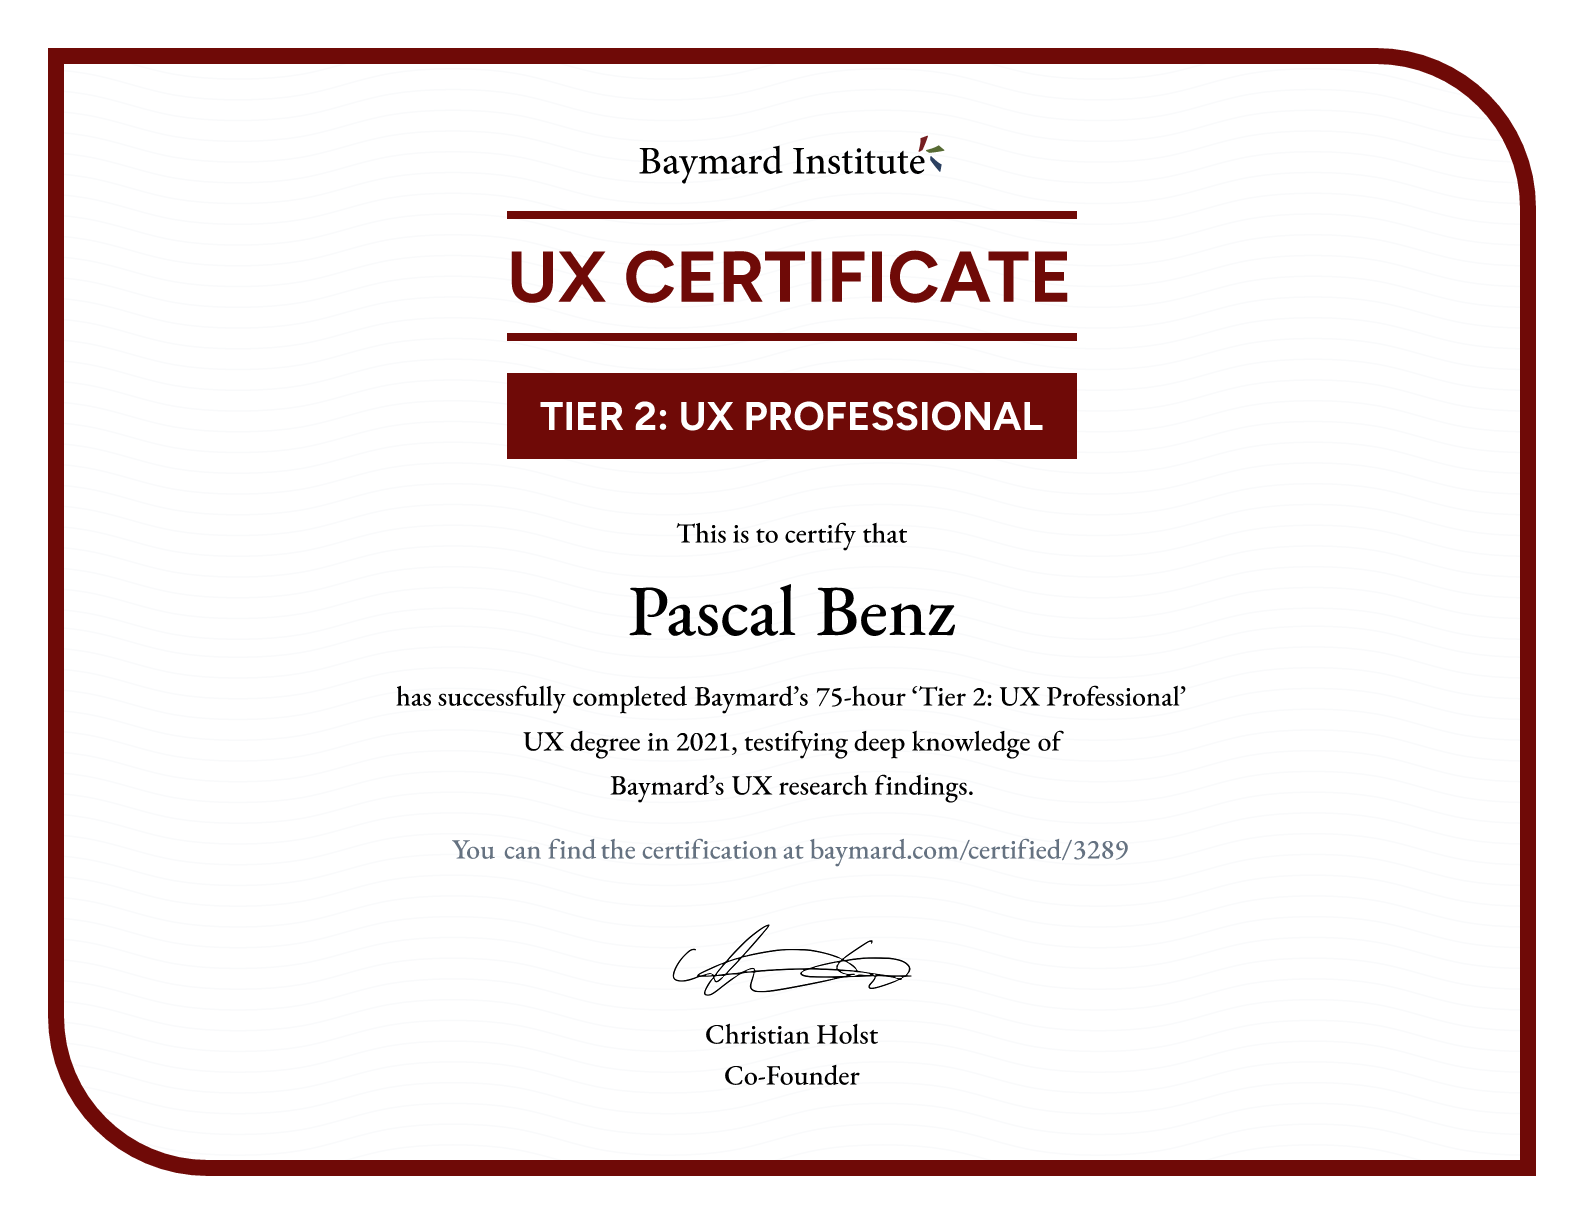 Pascal Benz’s certificate